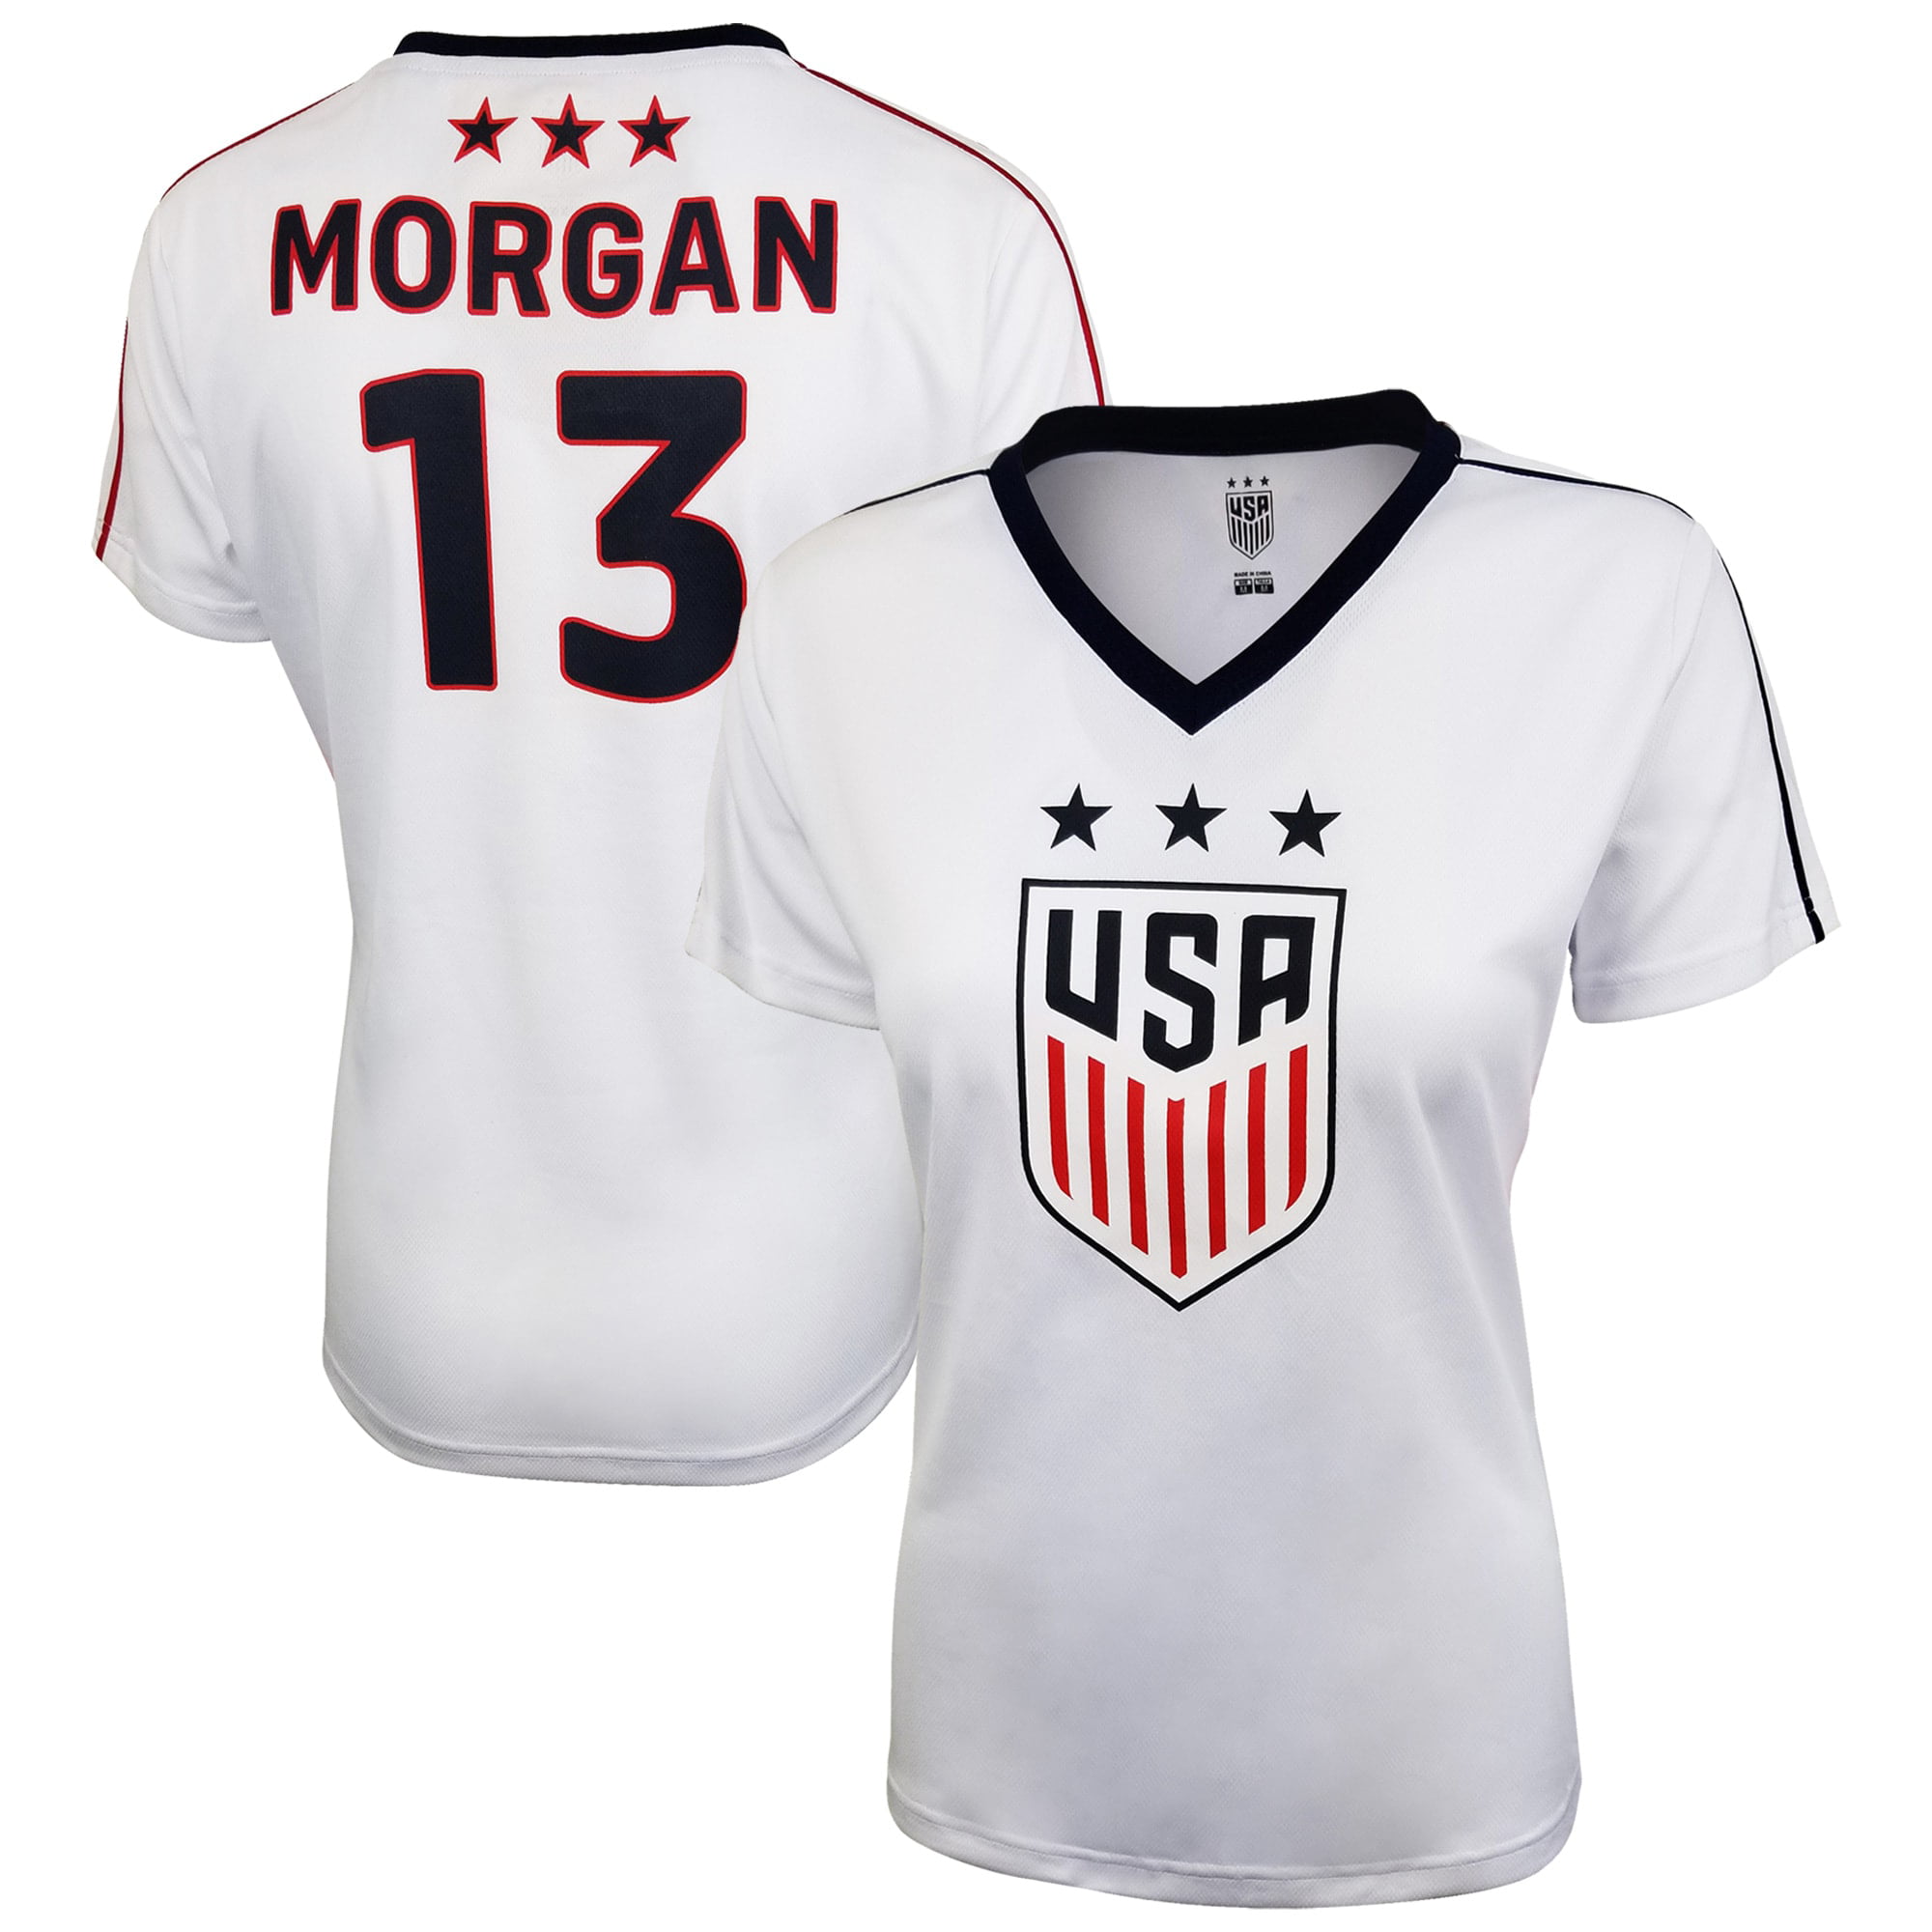 Icons Alex Morgan USWNT Women's 2019 Team Jersey - White, Size: Large